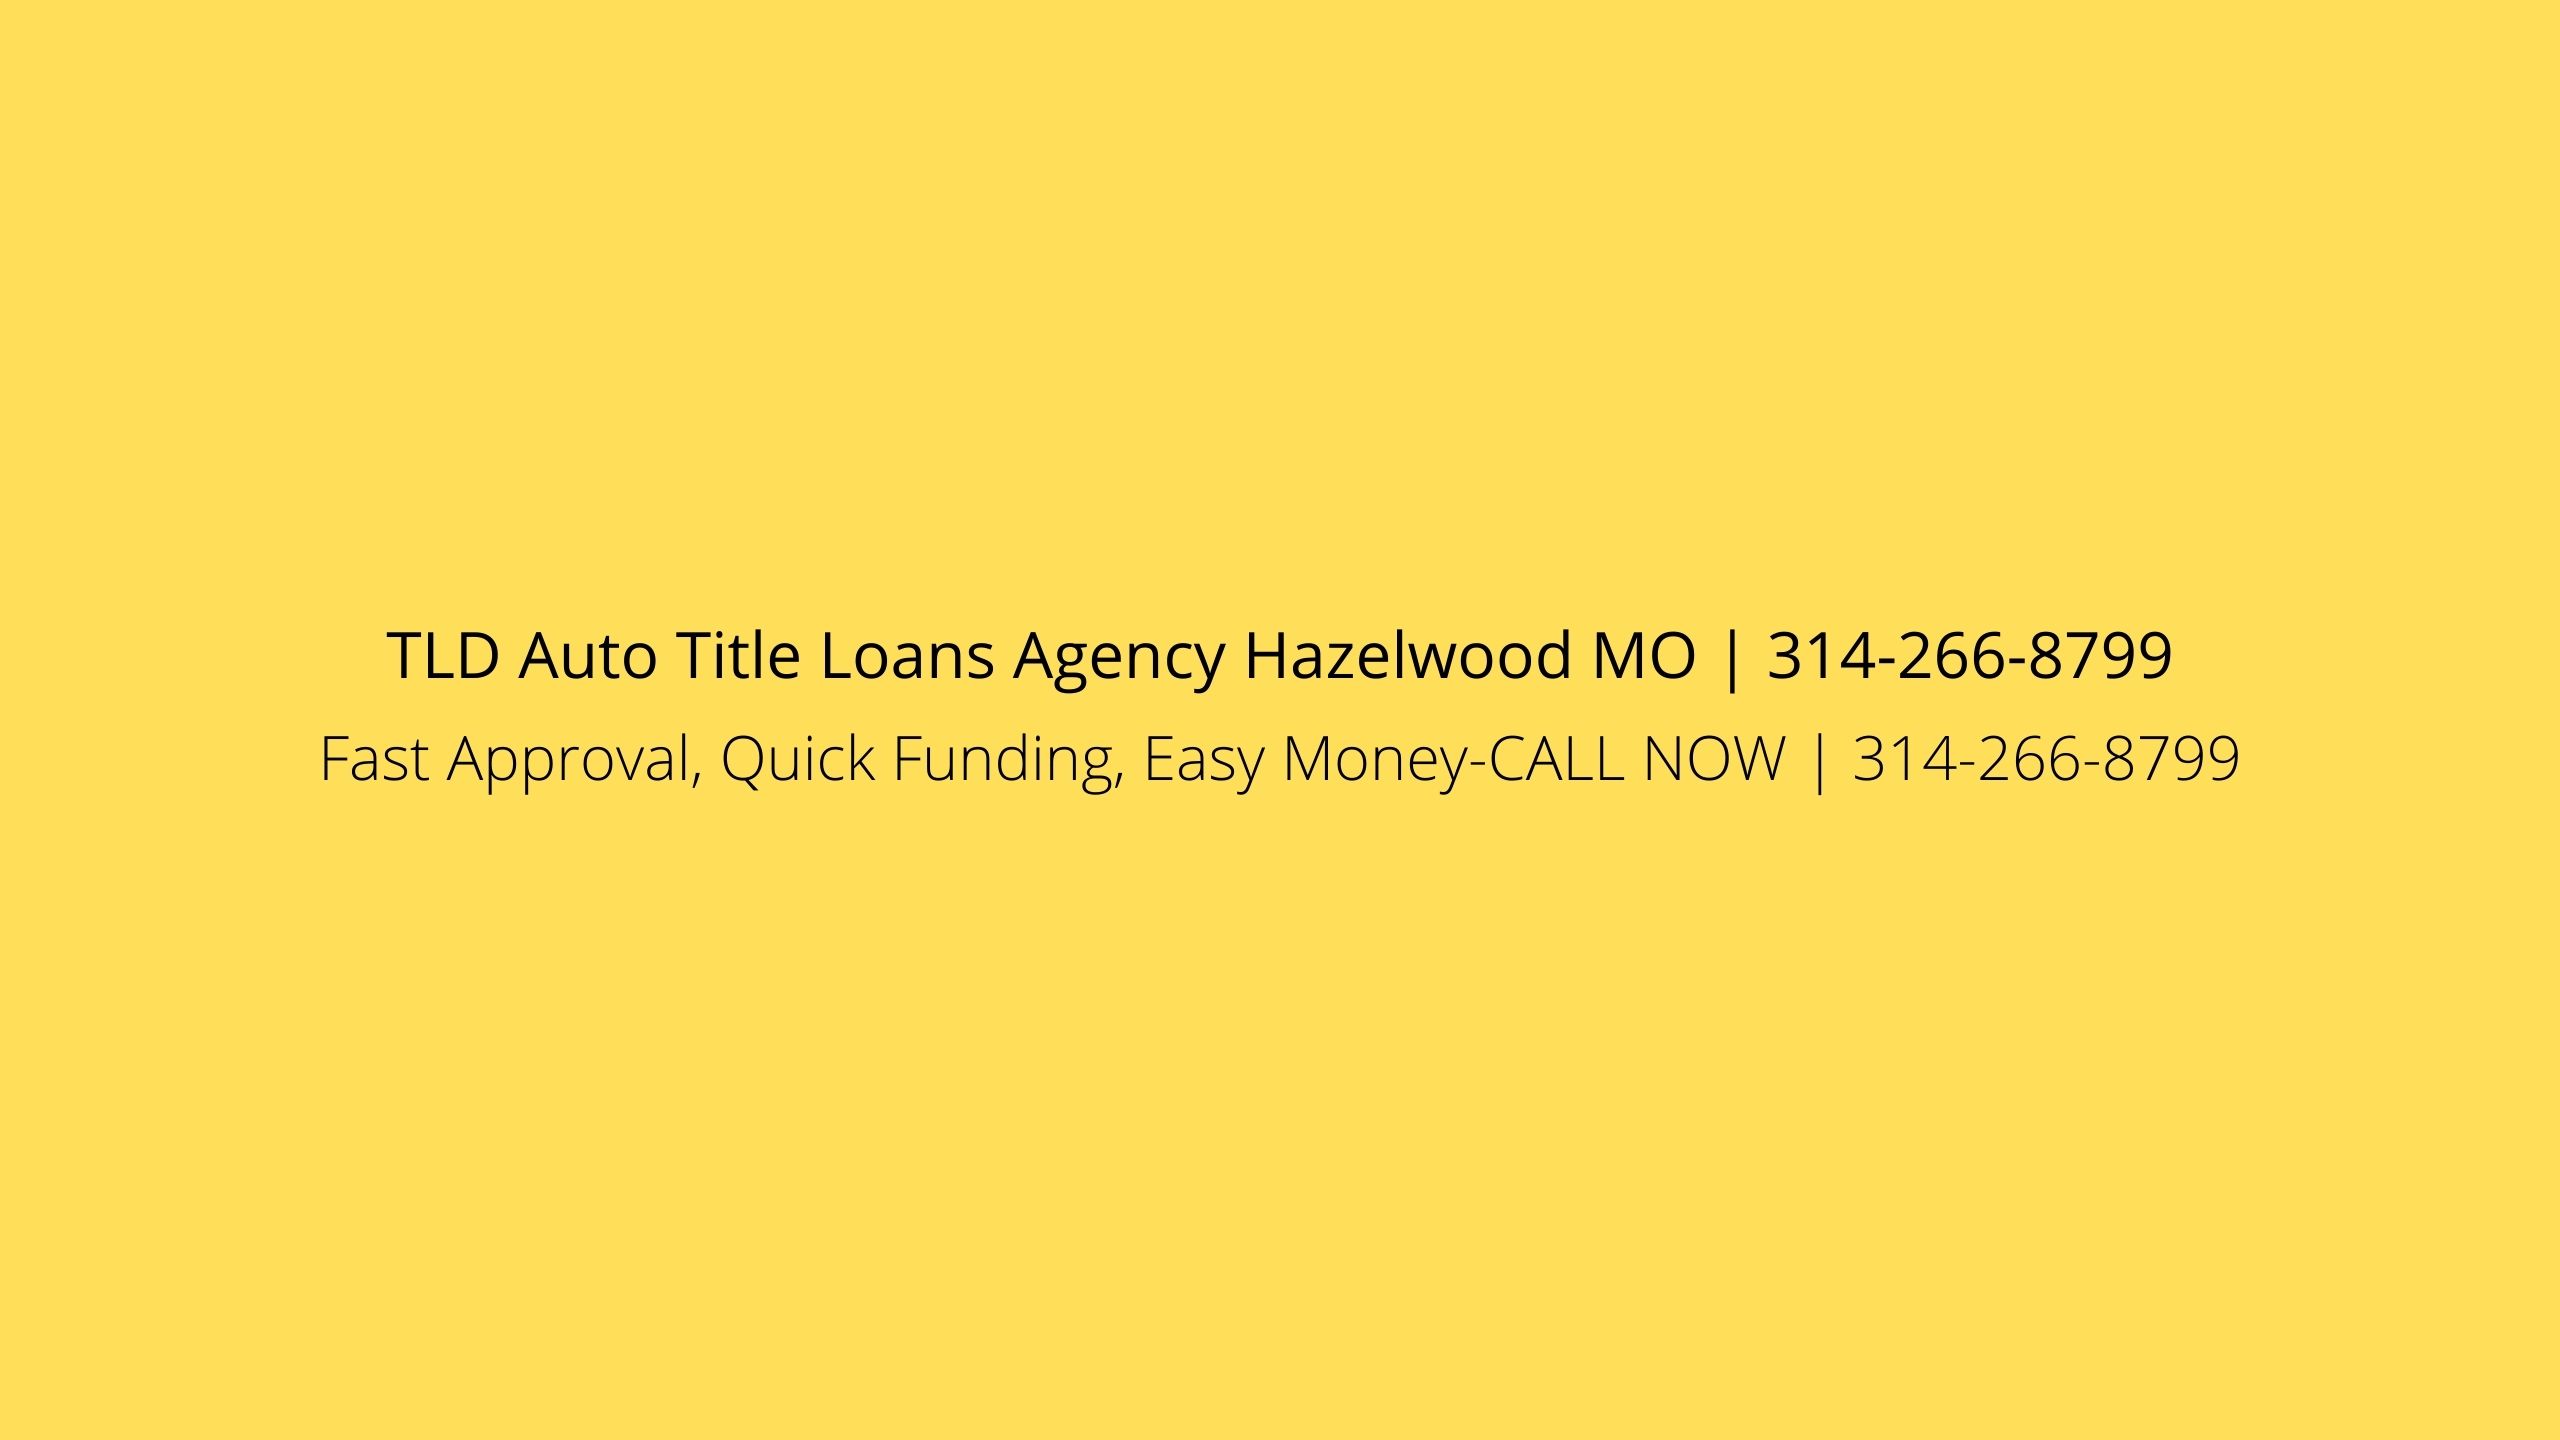 TLD Auto Title Loans Agency Hazelwood MO's Logo